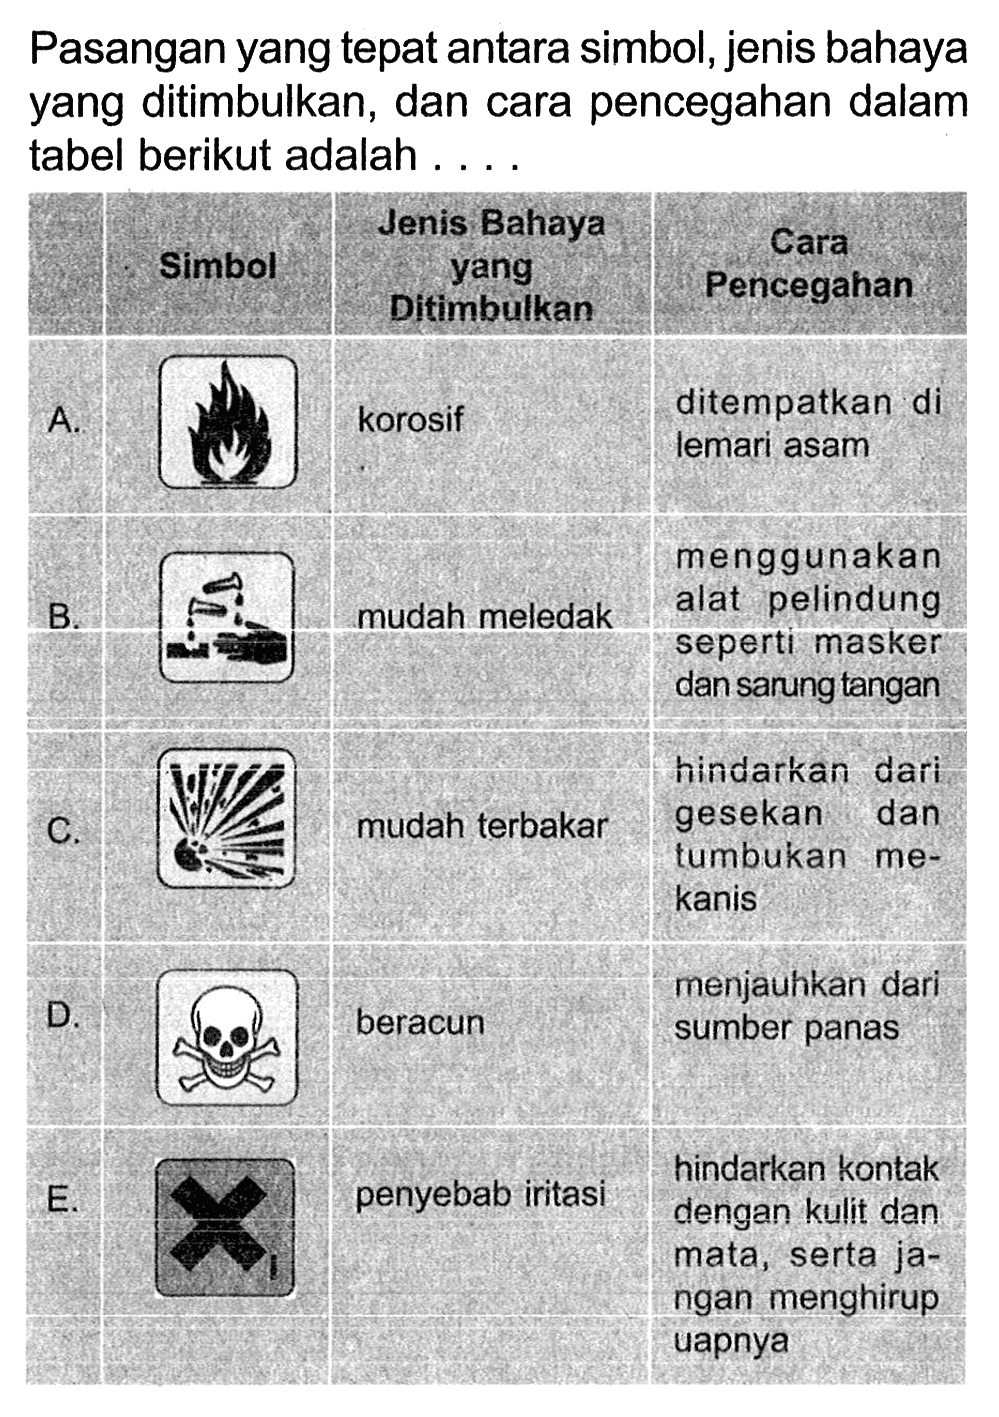 Pasangan yang tepat antara simbol, jenis bahaya yang ditimbulkan, dan cara pencegahan dalam tabel berikut adalah ...